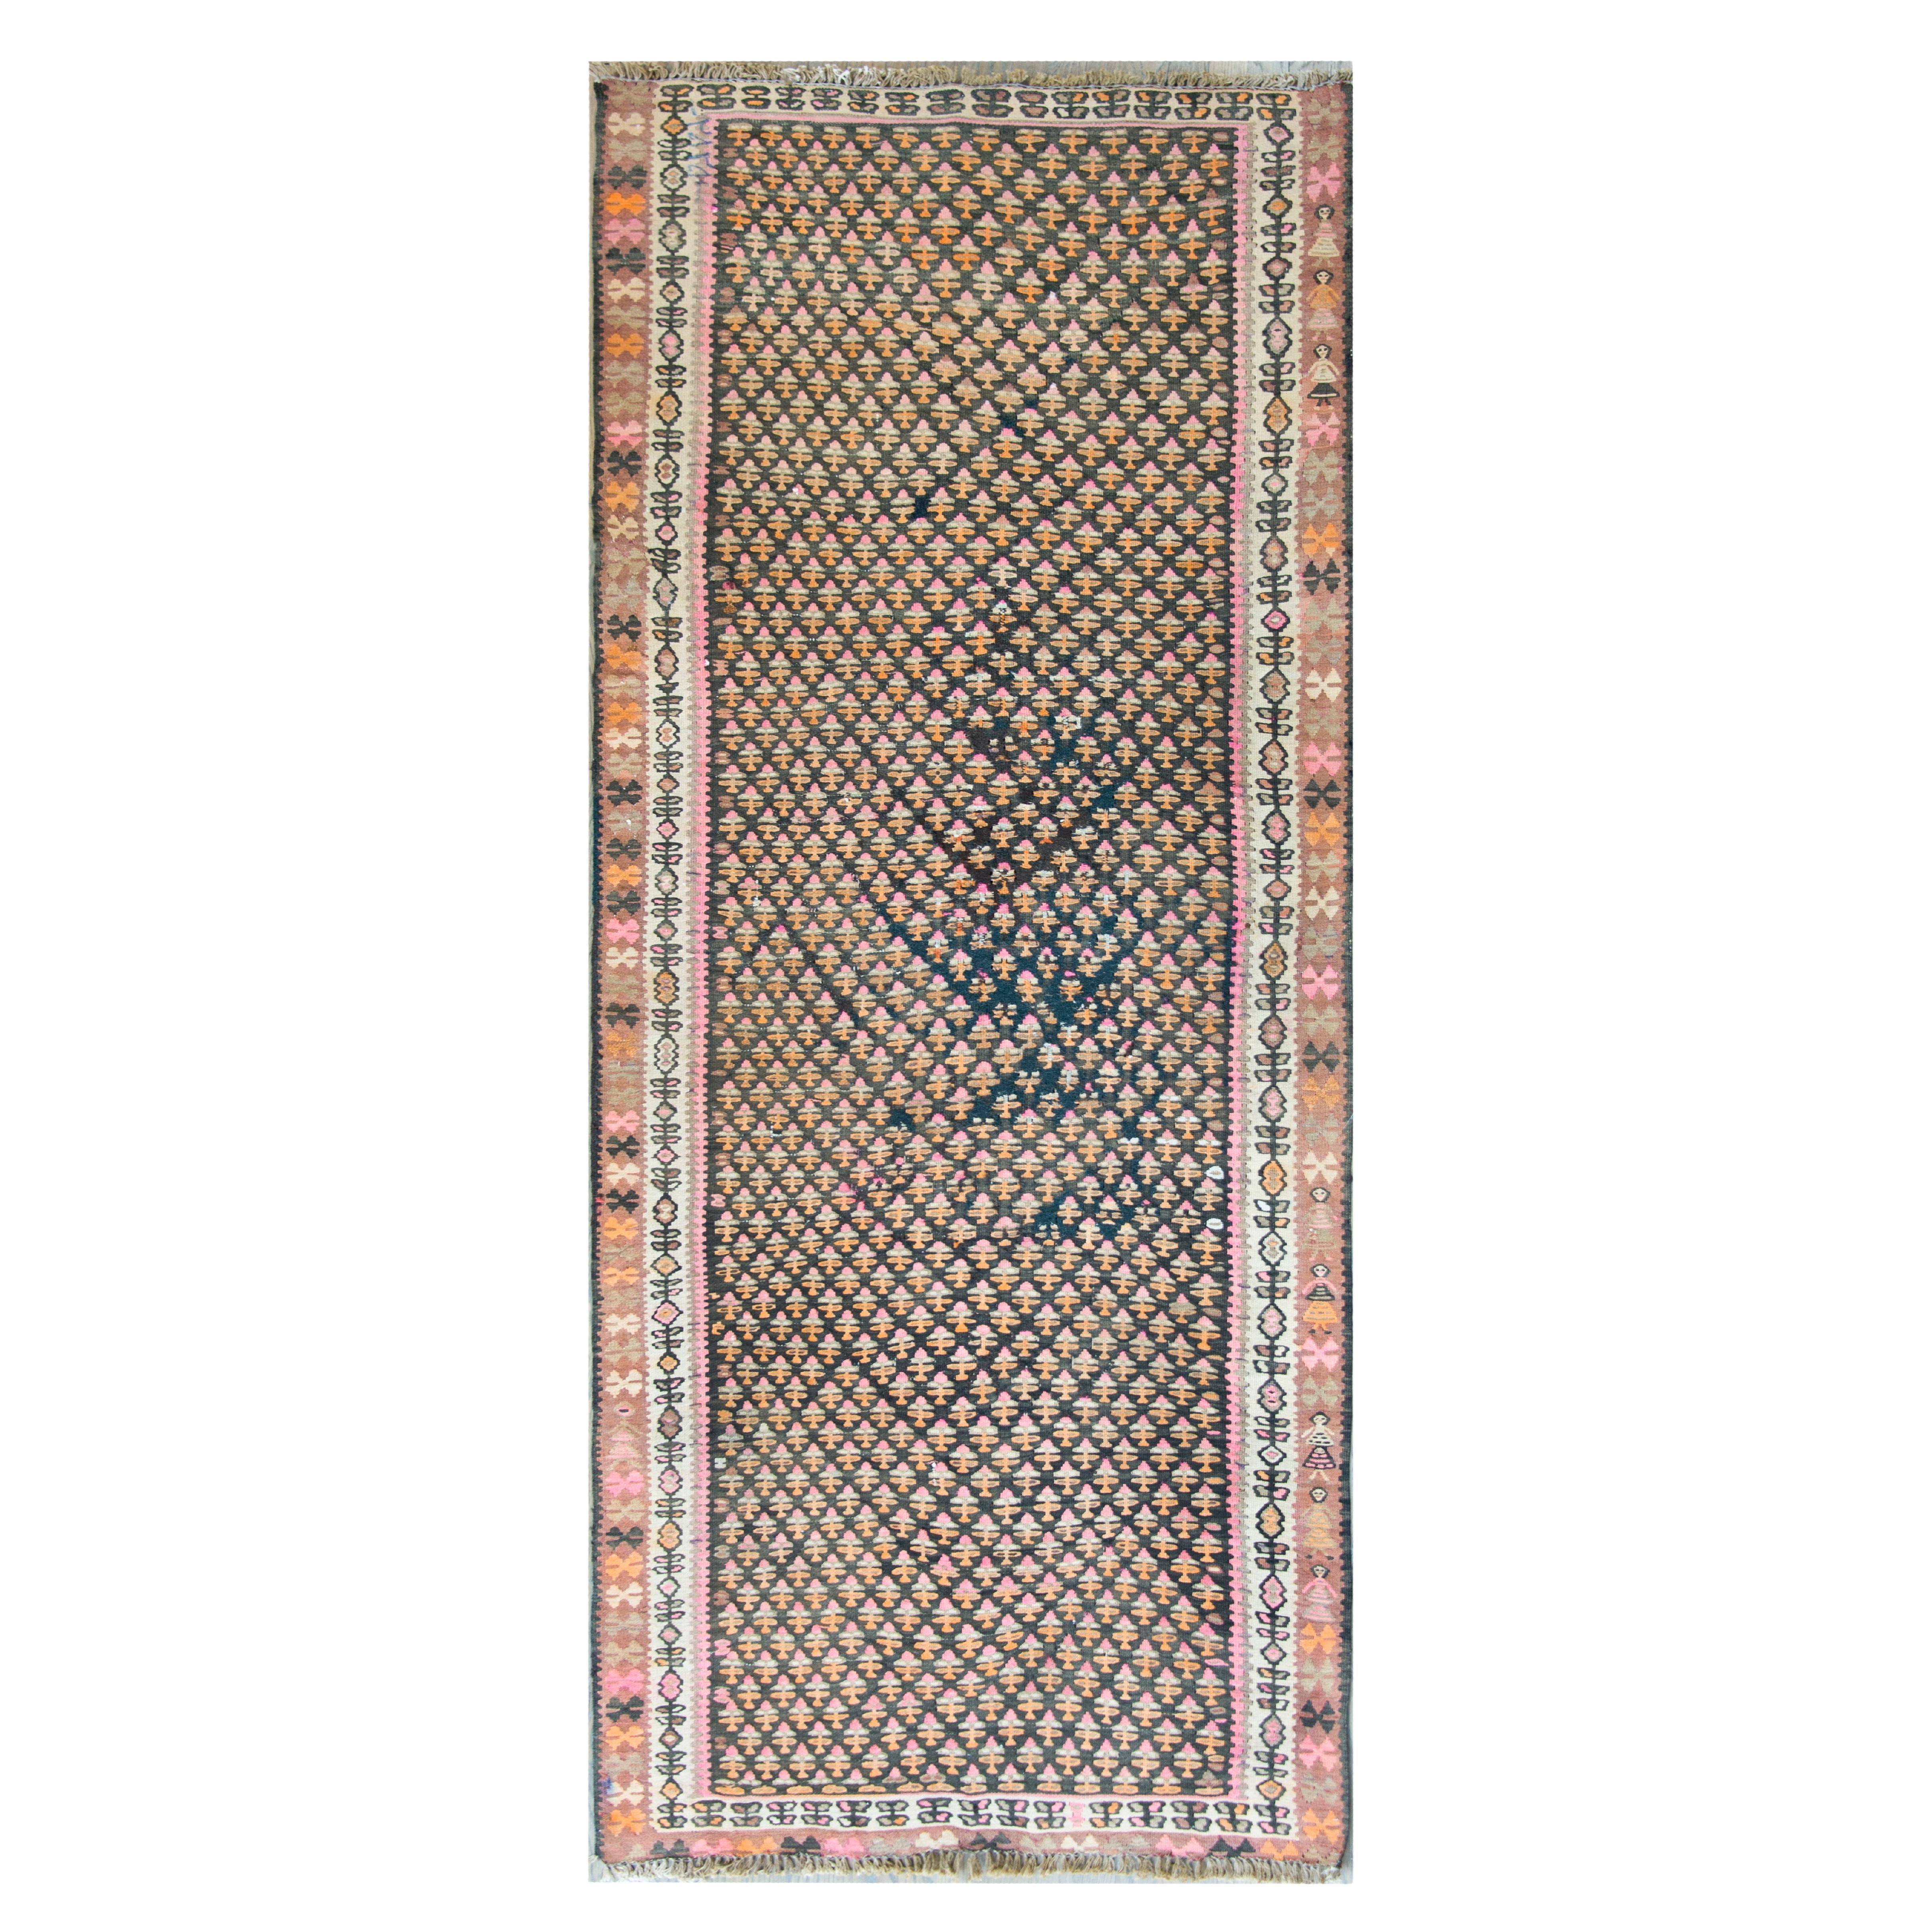 Early 20th Century Kurdish Kilim Rug For Sale